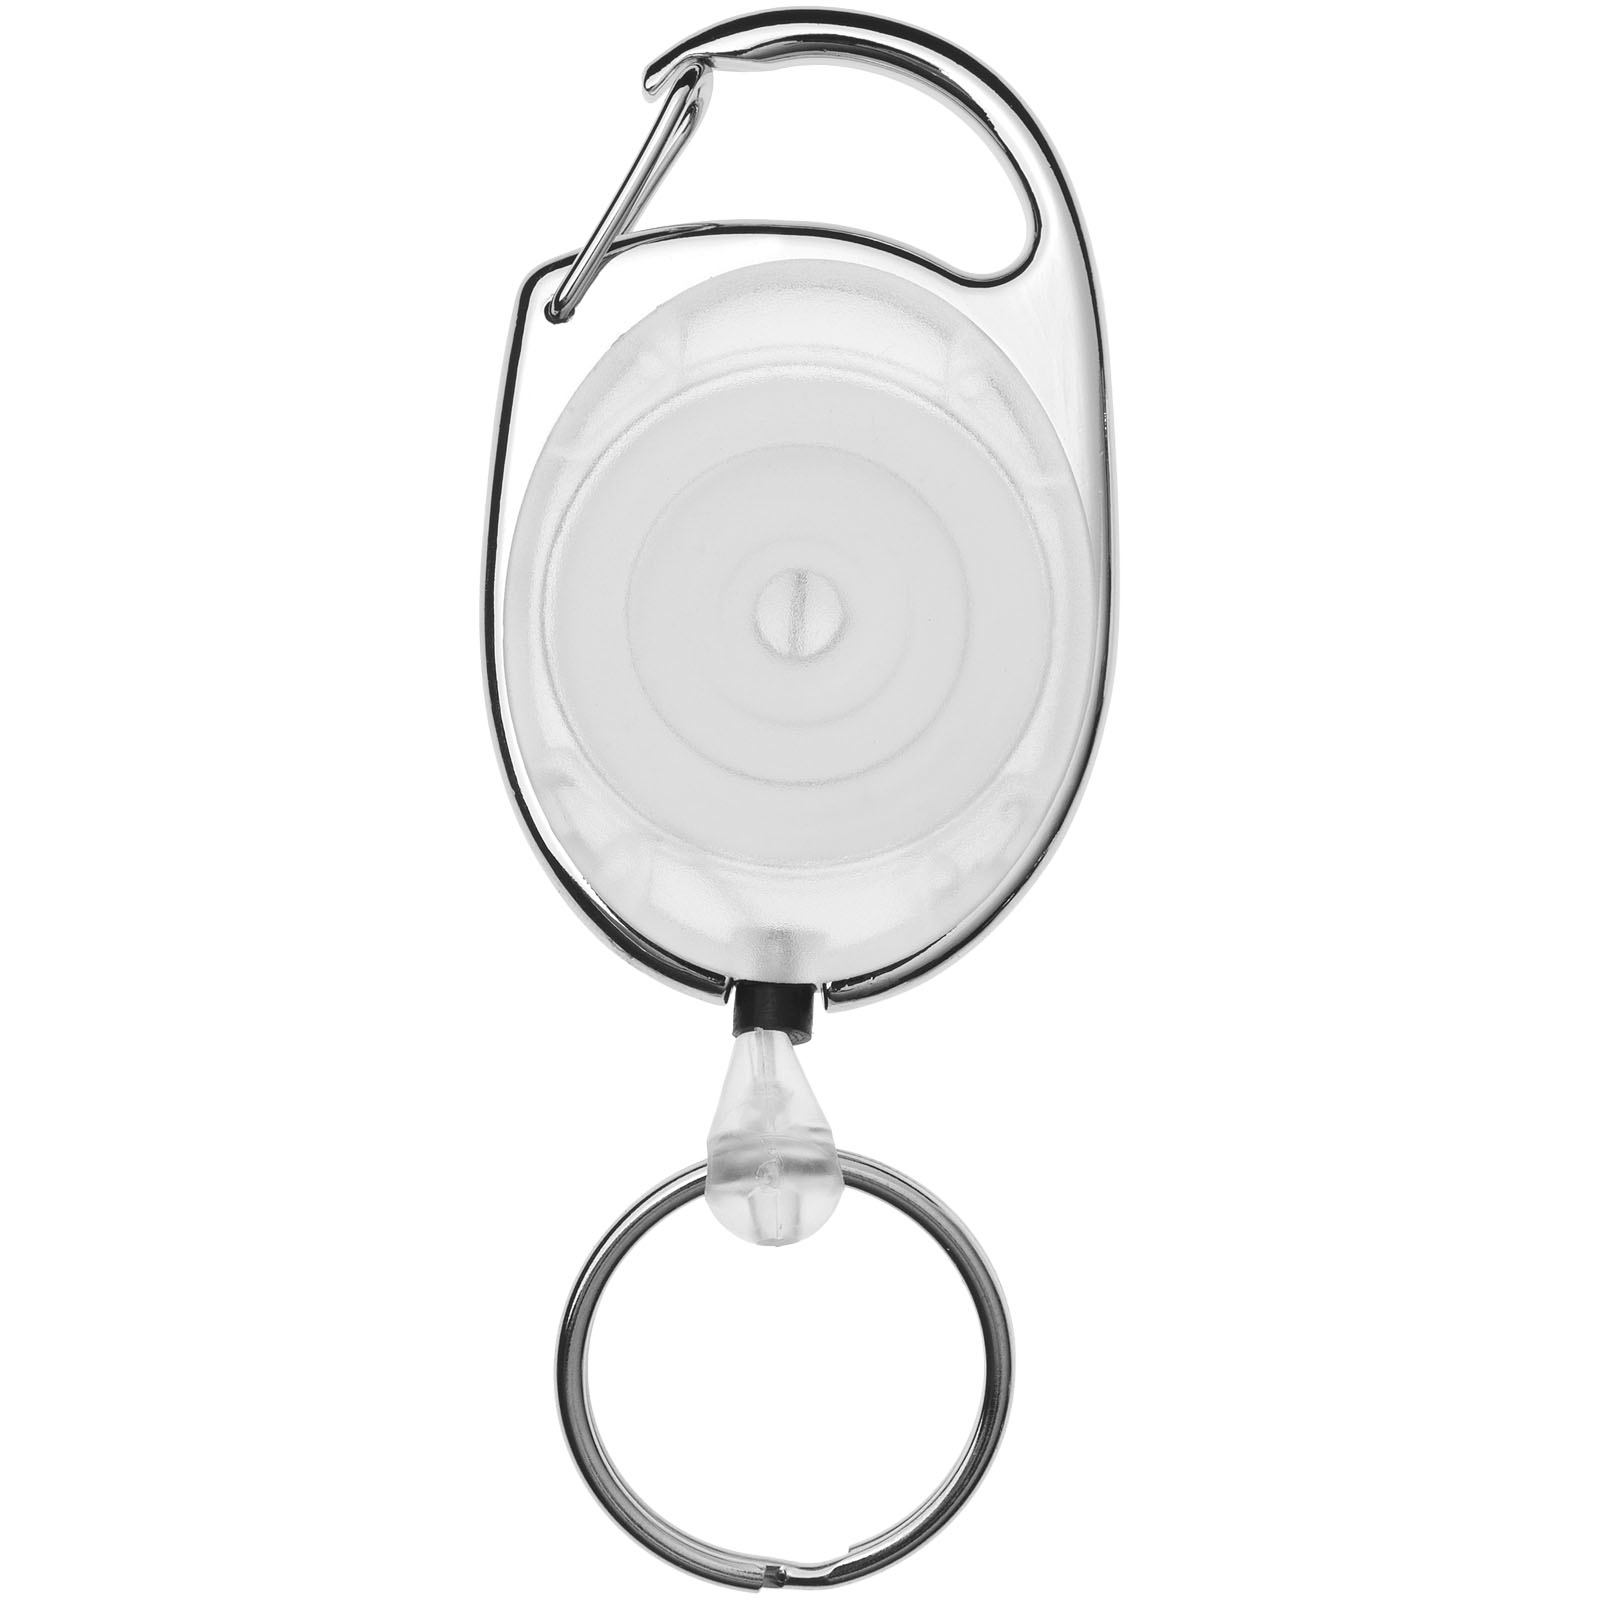 Advertising Keychains & Keyrings - Gerlos roller clip keychain - 1